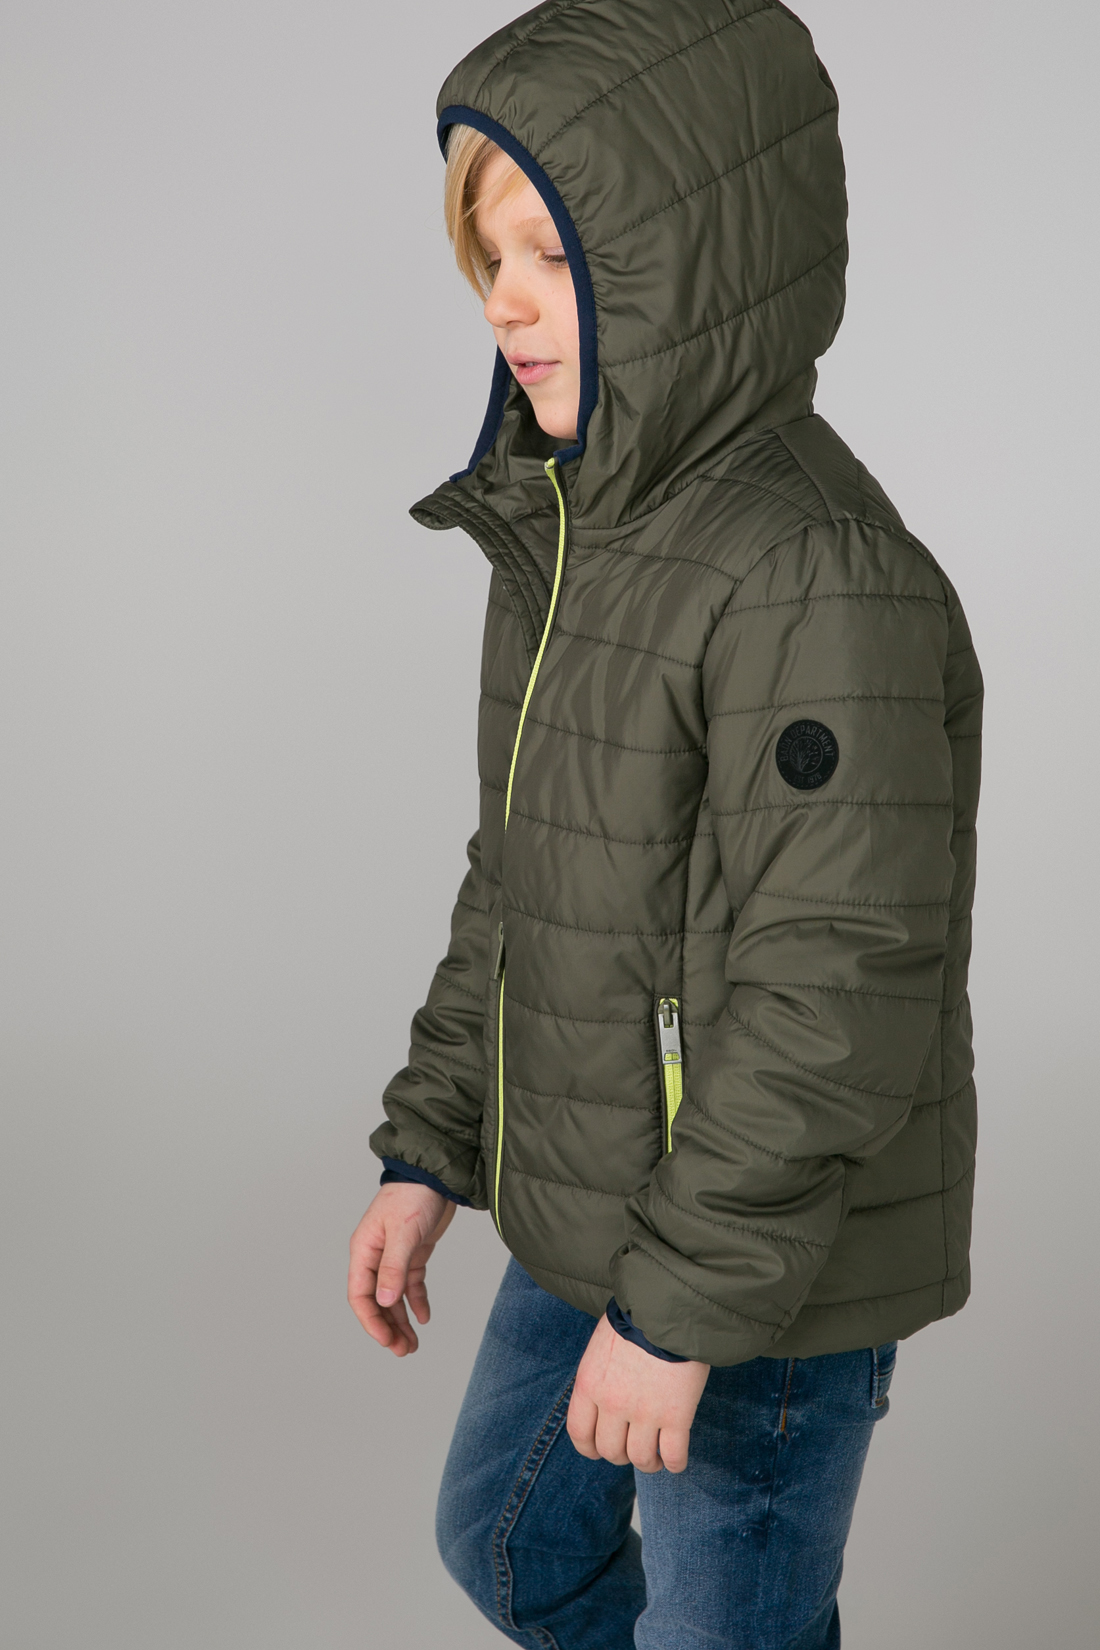 Куртка для мальчика (арт. baon BJ538001), размер 134-140, цвет зеленый Куртка для мальчика (арт. baon BJ538001) - фото 1